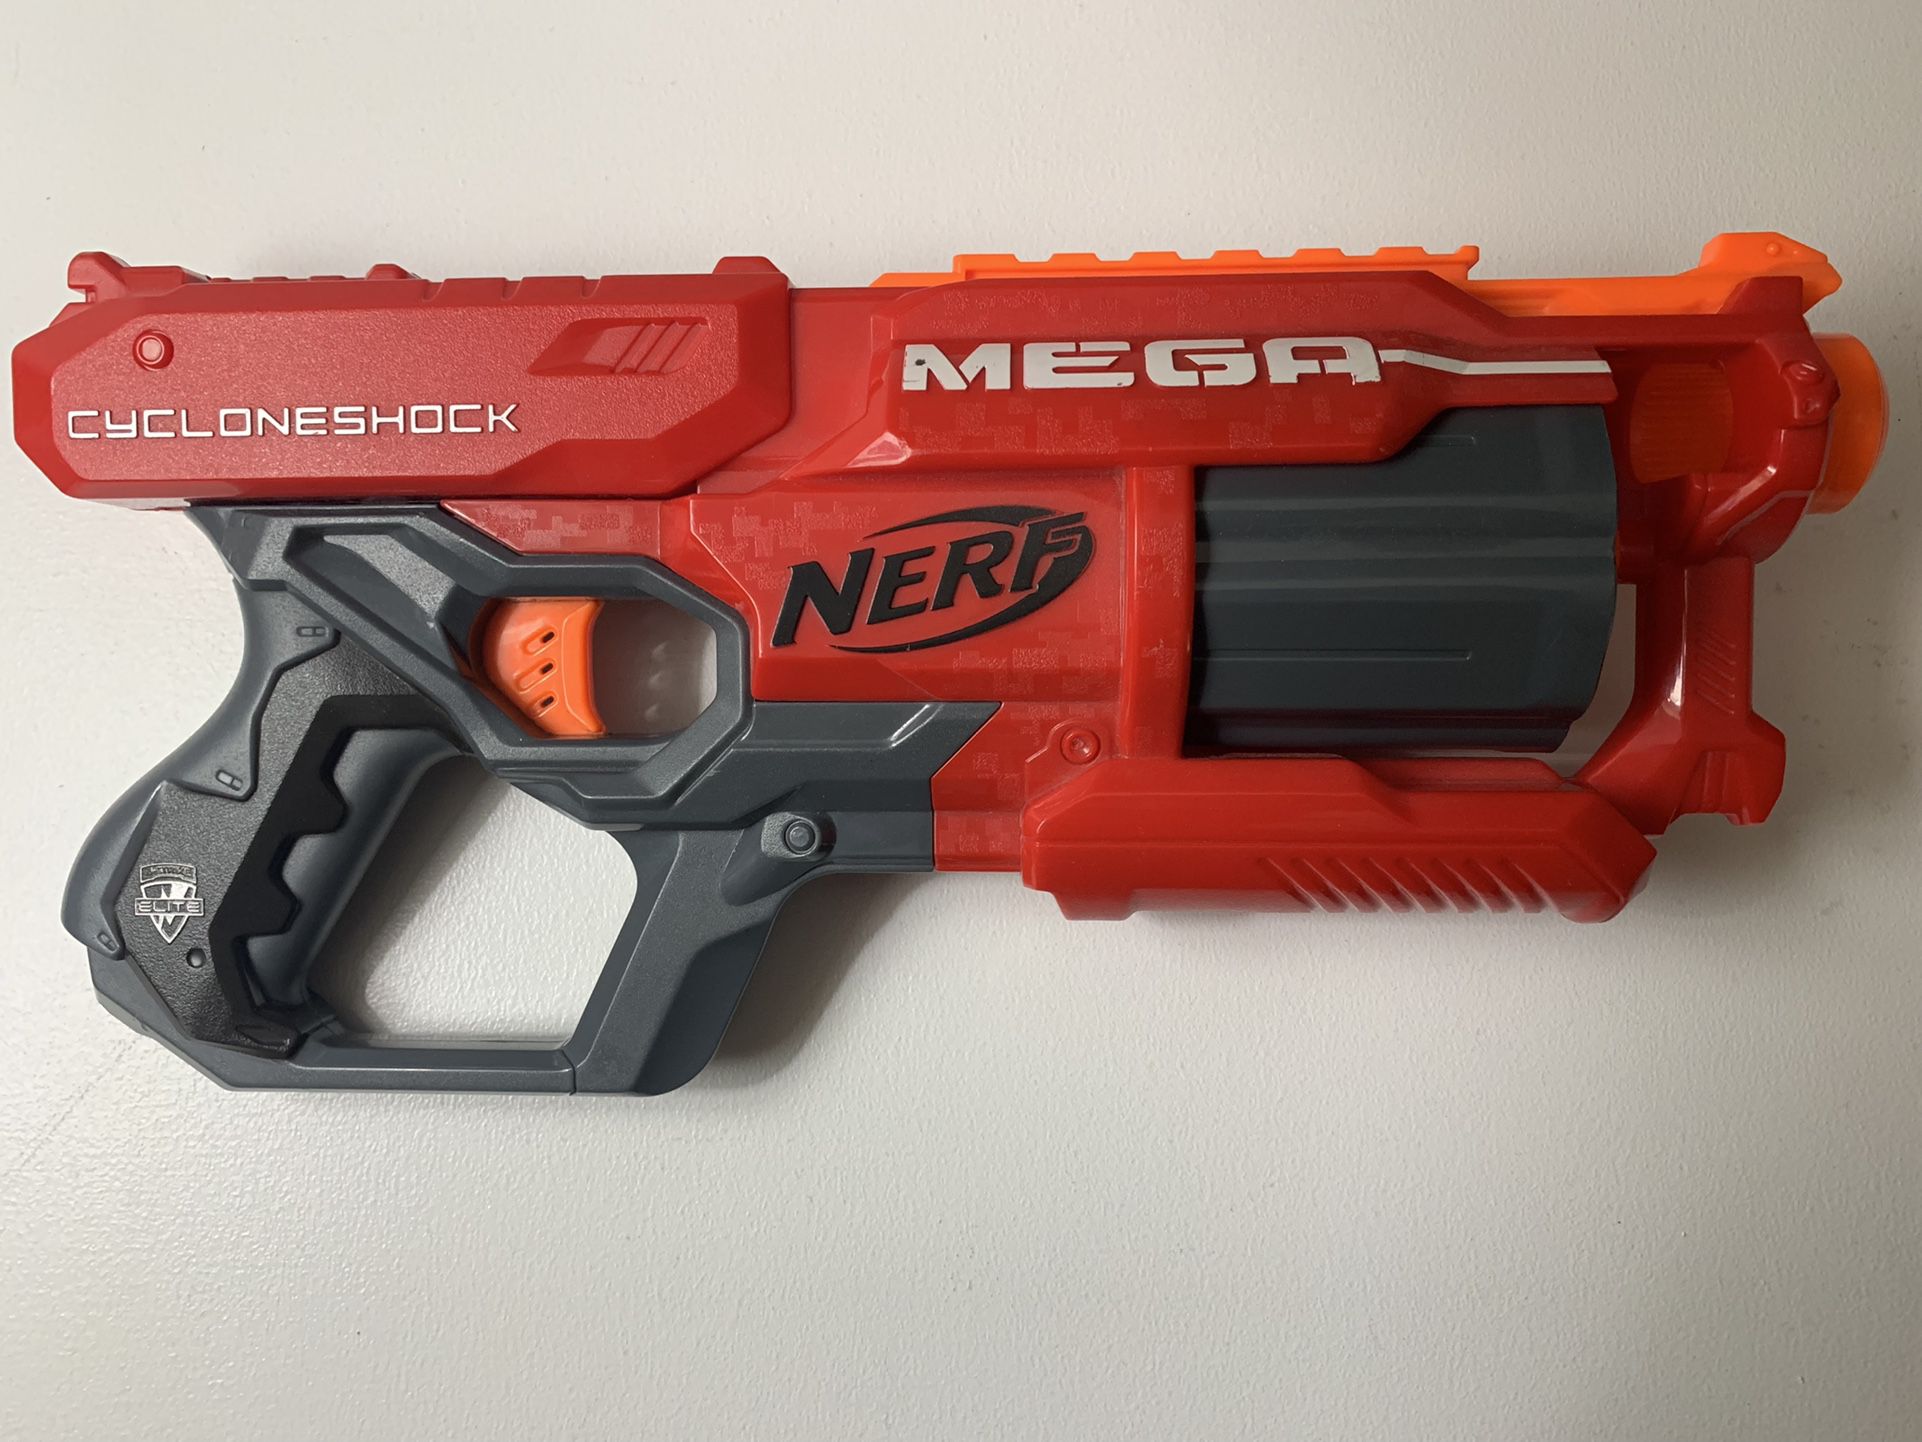 Nerf Mega Cycloneshock Blaster